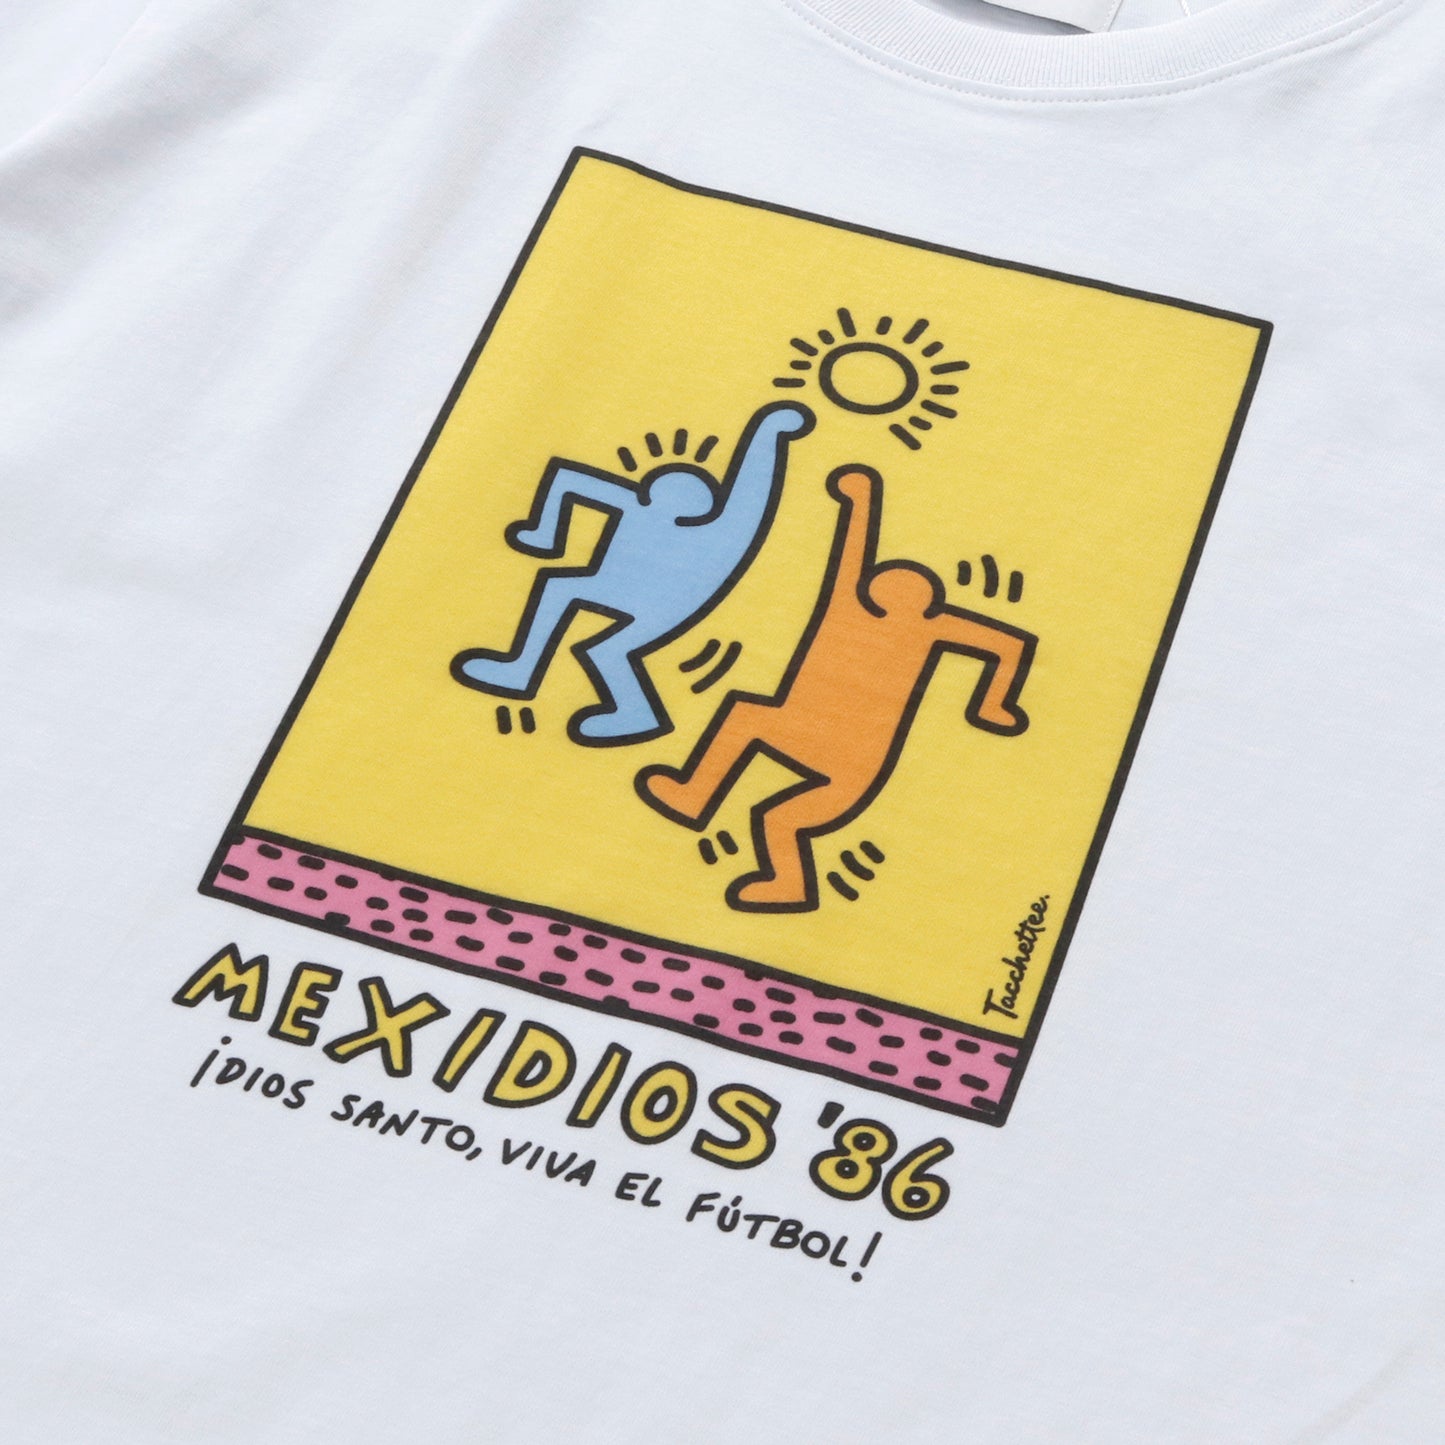 MEXIDIOS '86 Tシャツ - UNISEX - ホワイト